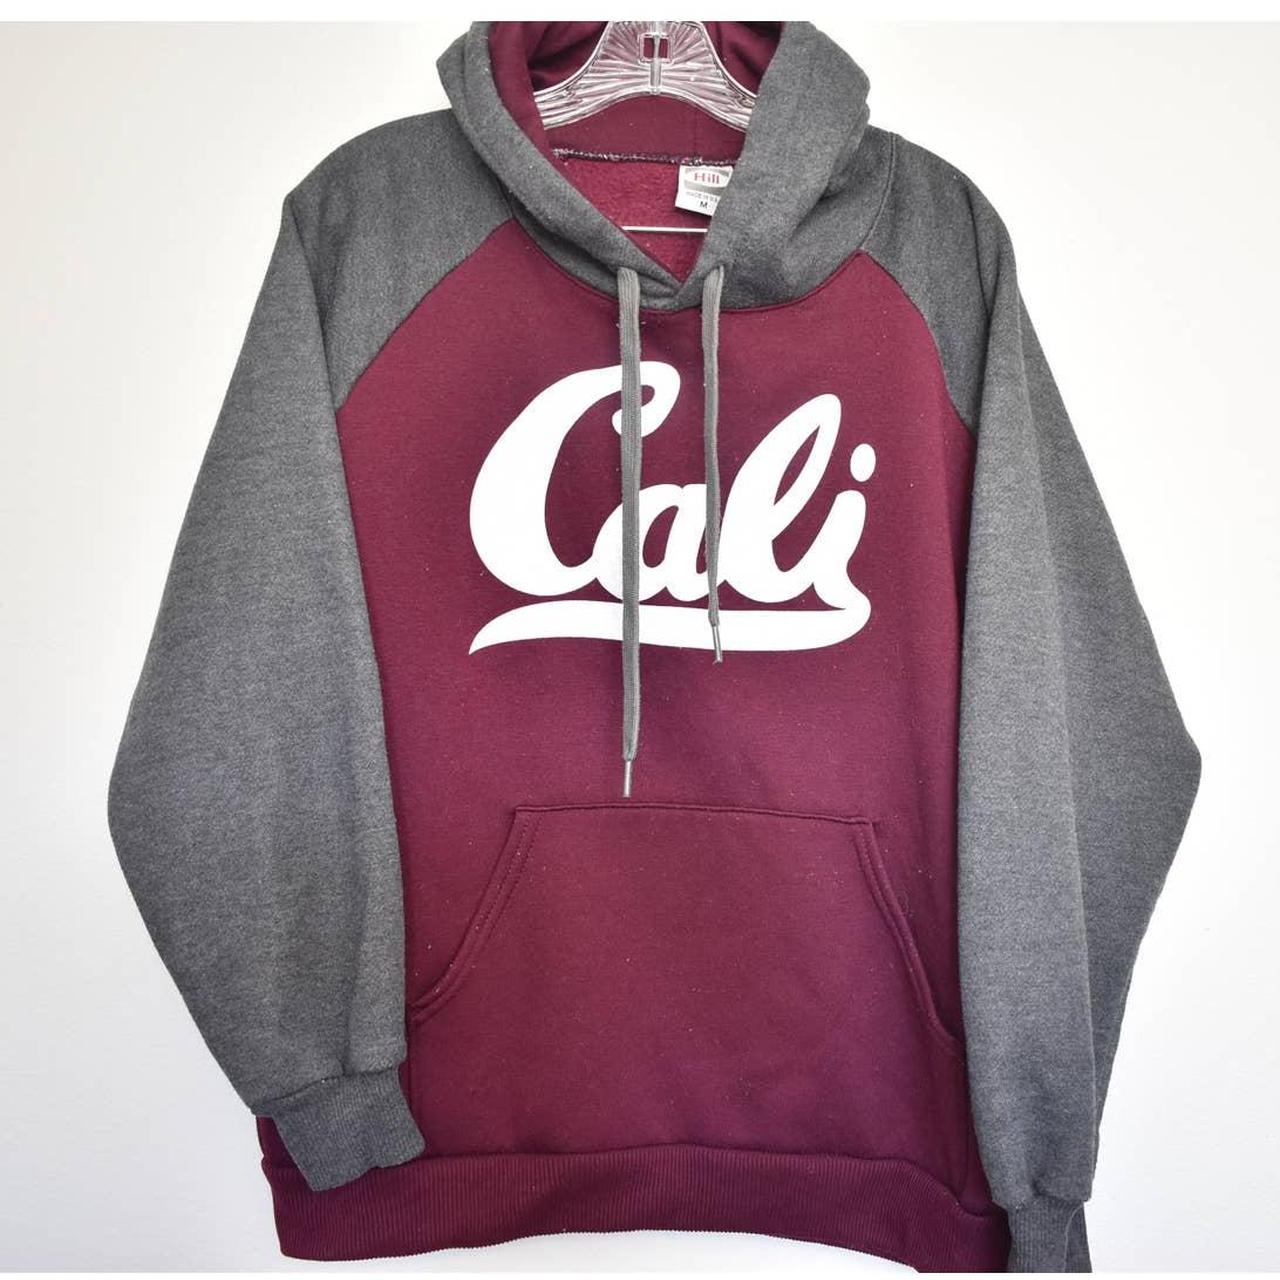 Product Image 1 - Hill men's color-block Cali hoodie.